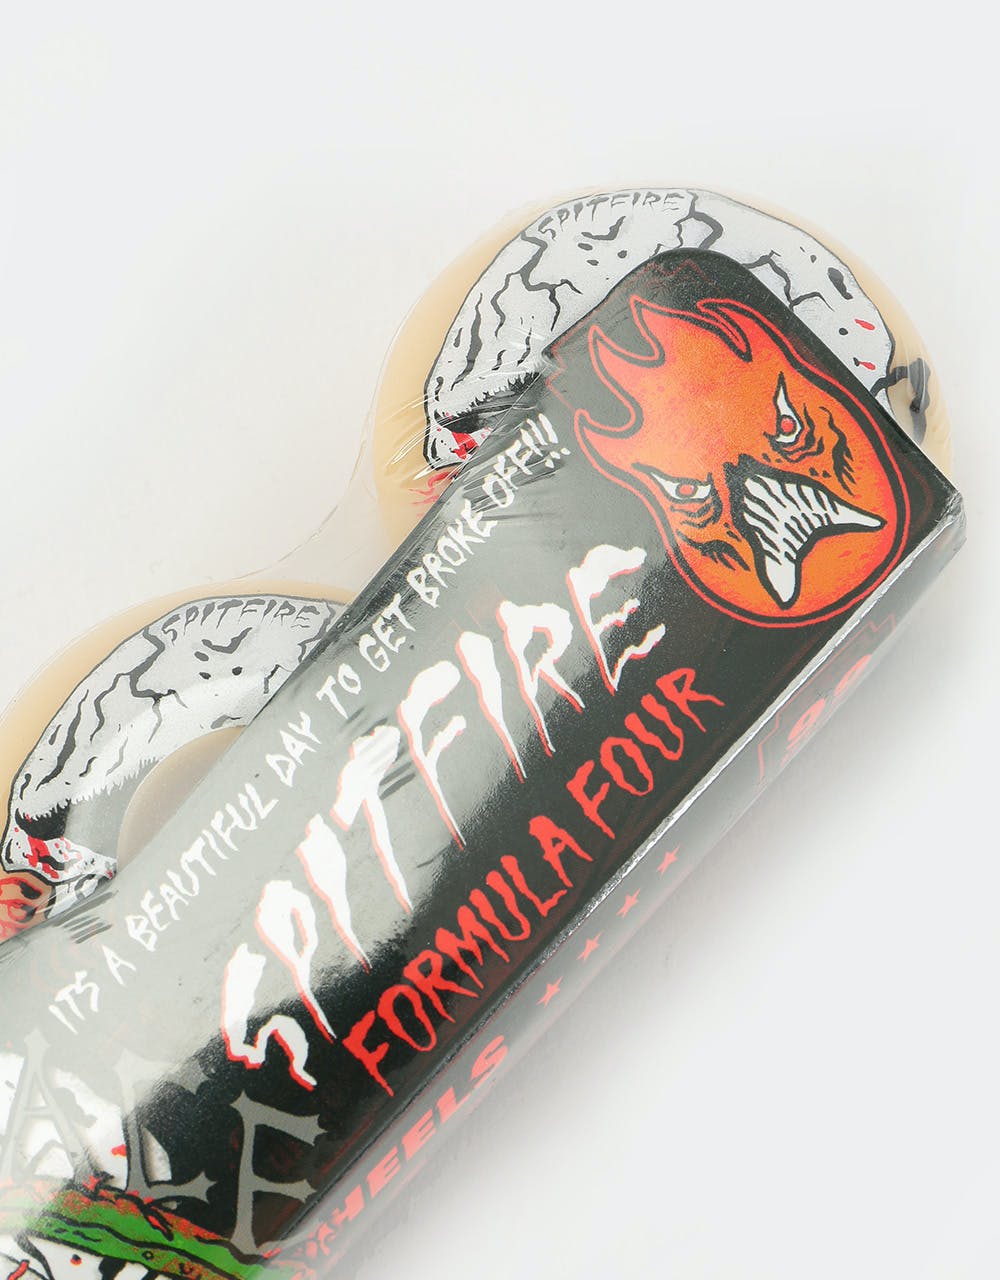 Spitfire x Neckface Spanky Formula Four Classic 99d Skateboard Wheel - 54mm